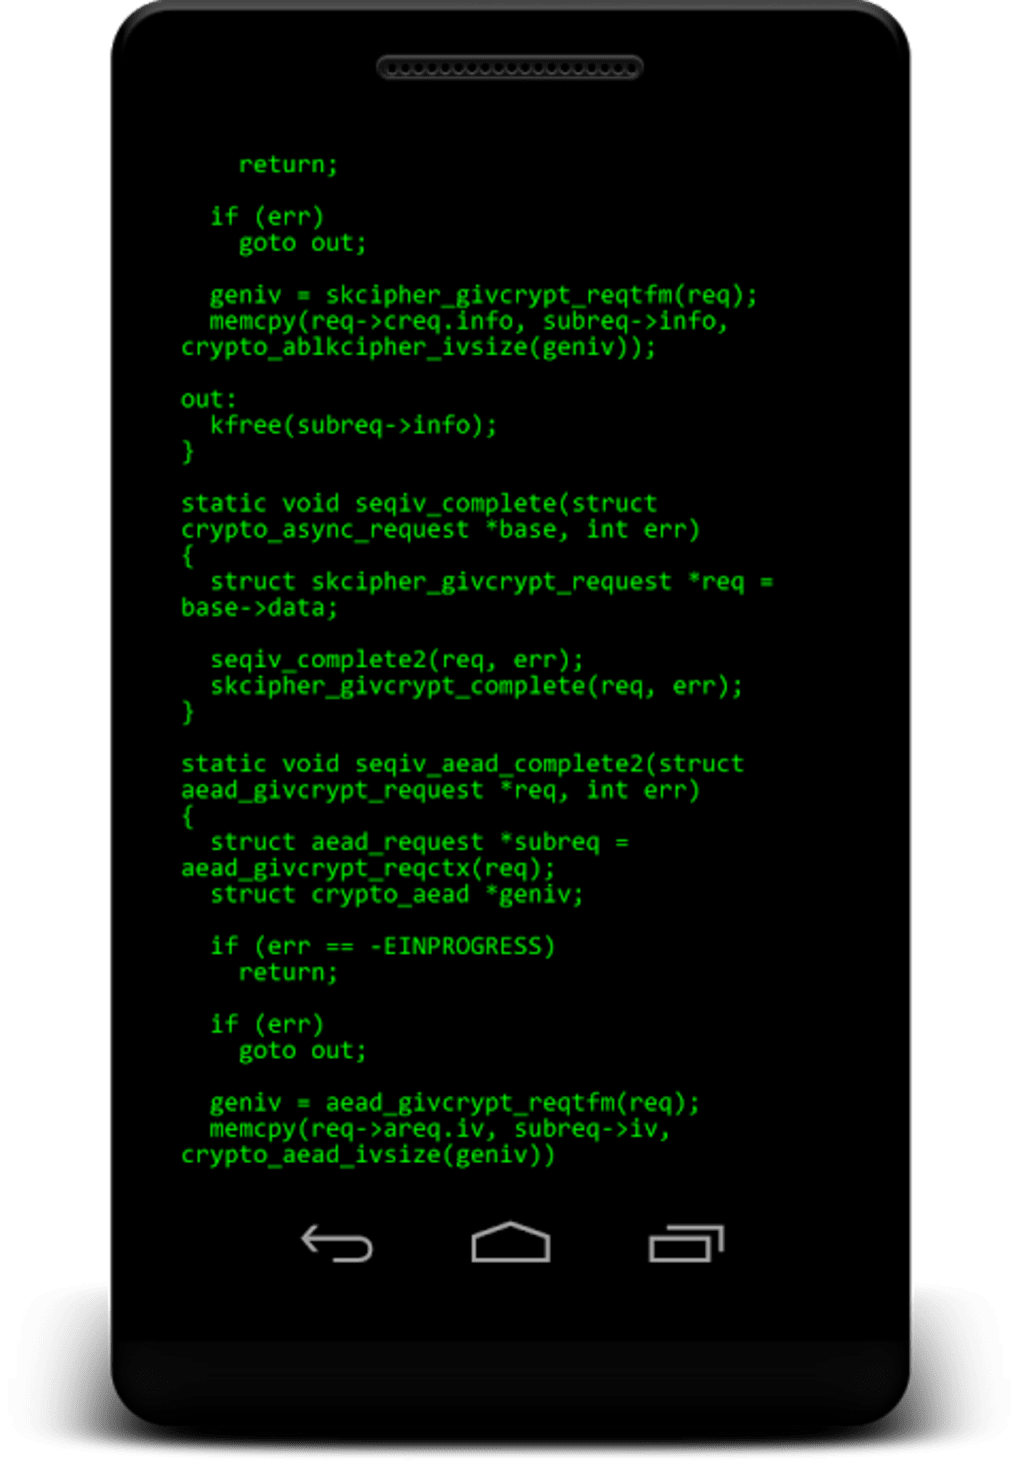 Download do APK de Computer Hack Prank Simulator para Android